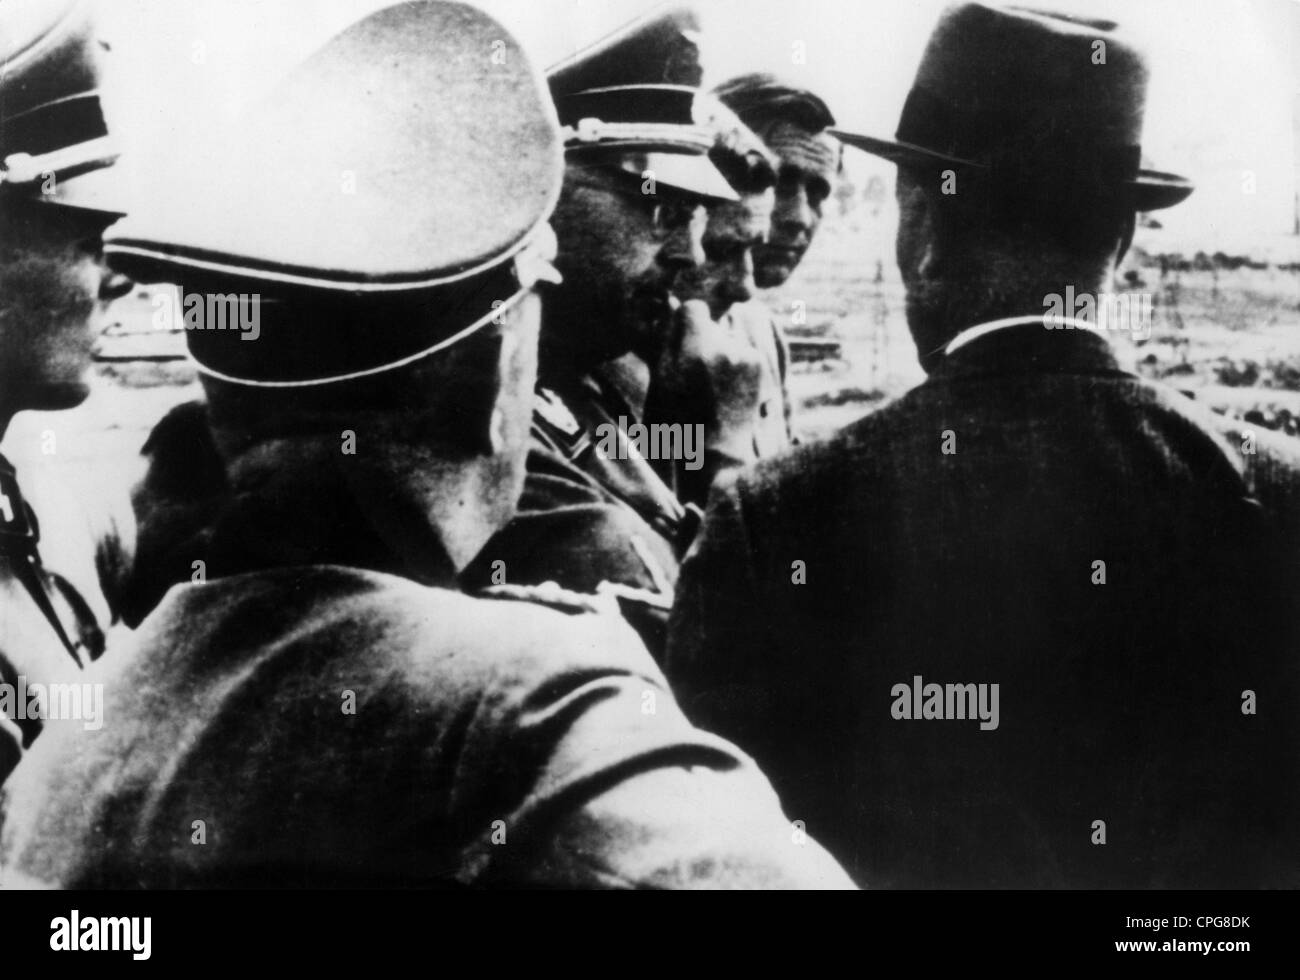 Himmler, Heinrich, 7.10.1900 - 23.5.1945, German politician (NSDAP), Reichsführer-SS, visit to concentration camp Auschwitz - Birkenau, 1942, right: Max Faust of IG Farben, Stock Photo